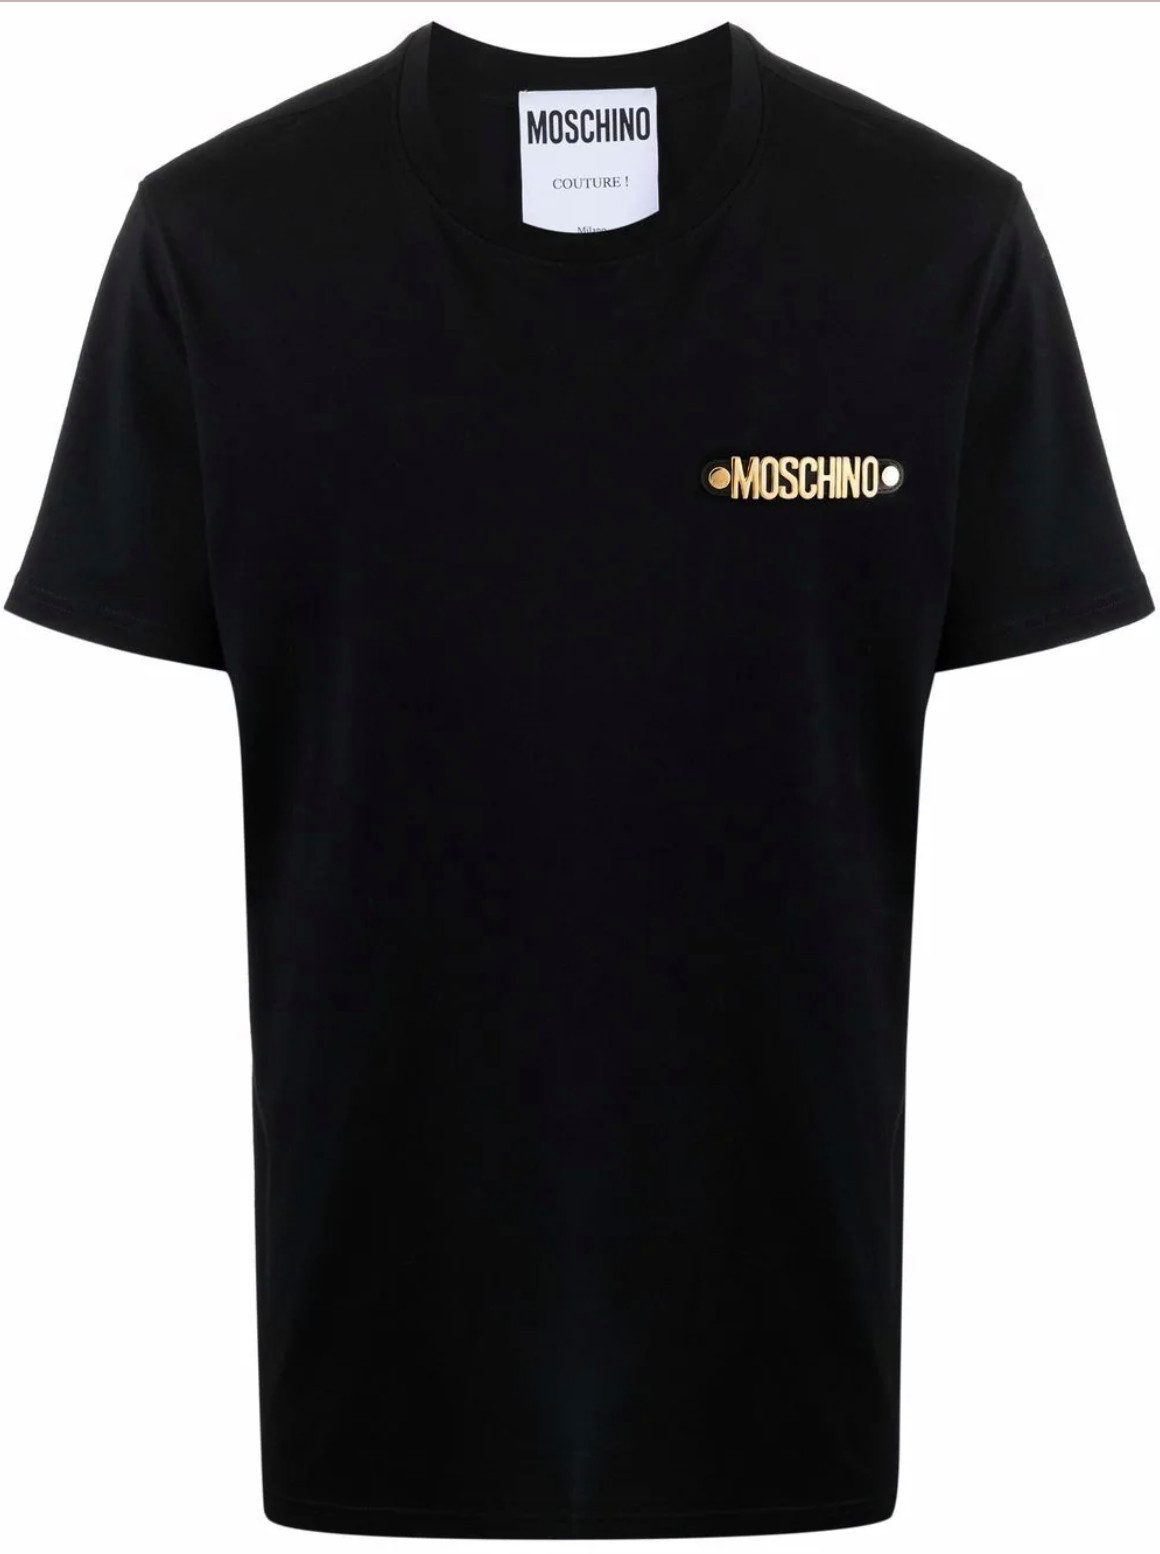 Moschino T-Shirt COUTURE T-shirt Metal Gold Logo Top Iconic Shirt Regular Fit Bnwt